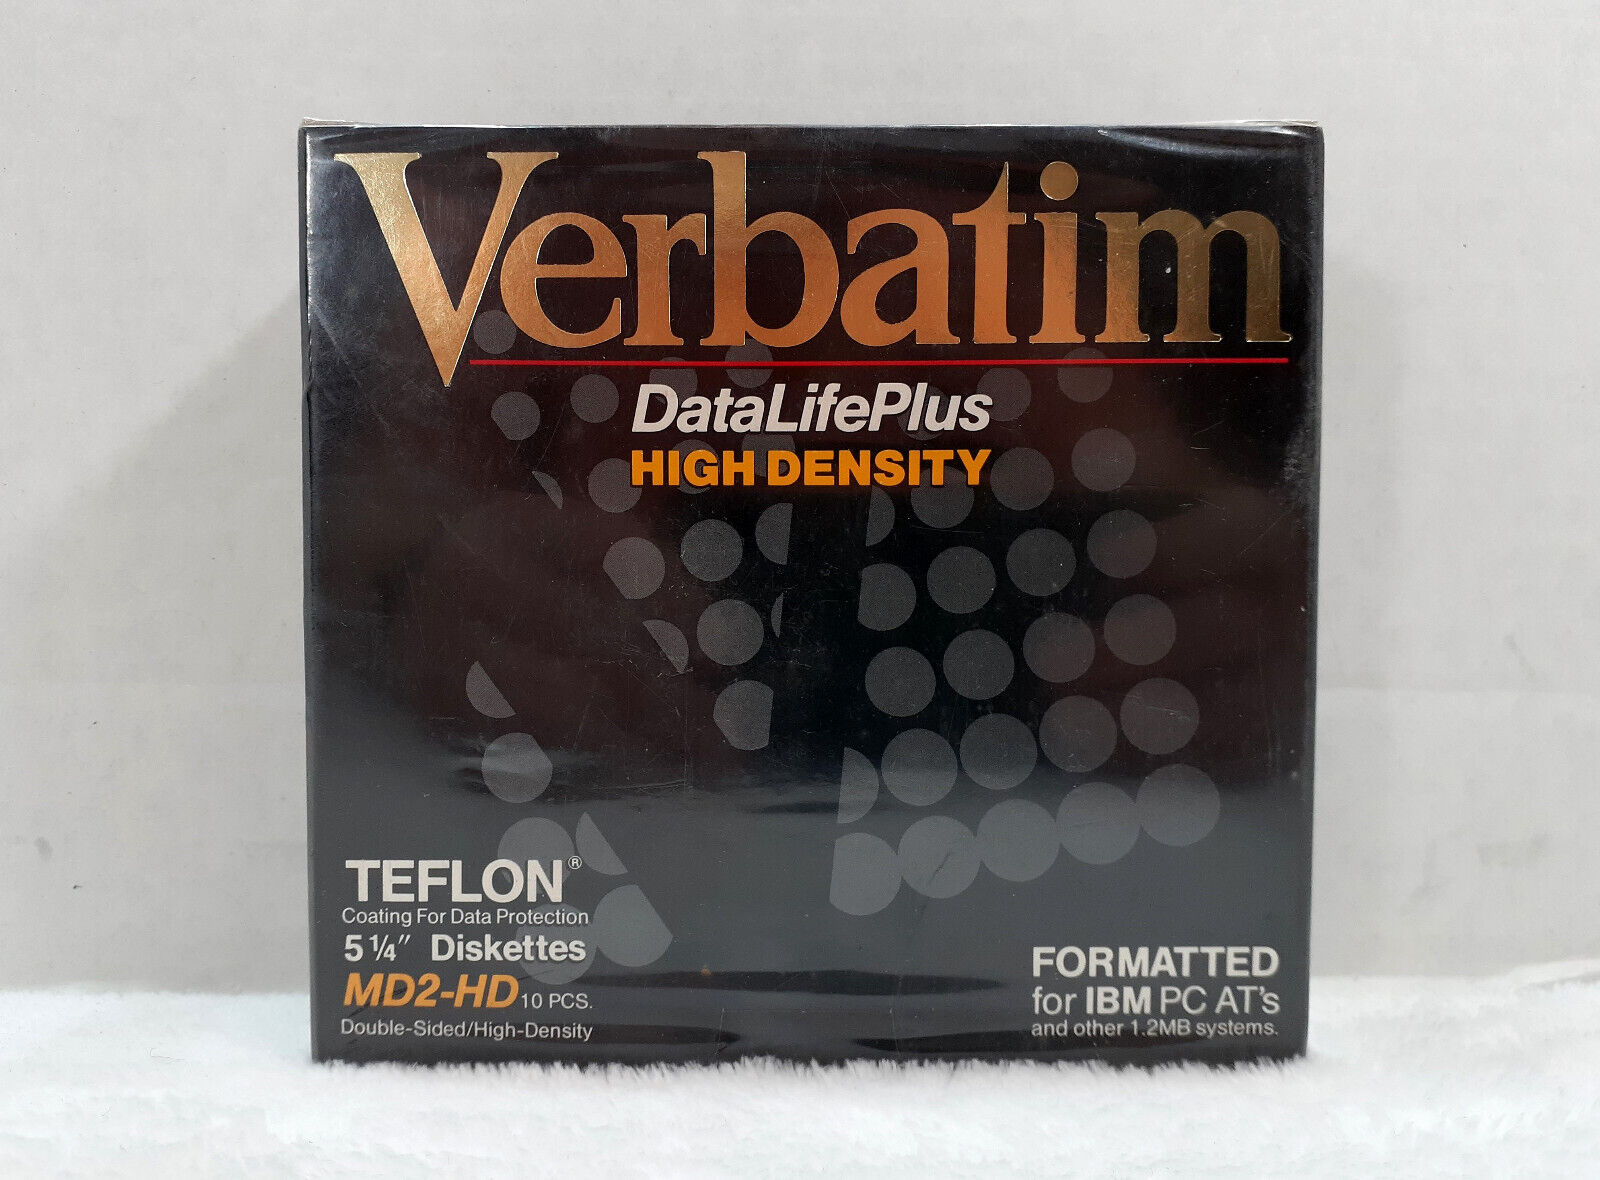 Verbatim DataLifePlus High Density 5 1/4 Diskettes MD2-HD 10 PCS 5.25 New Sealed